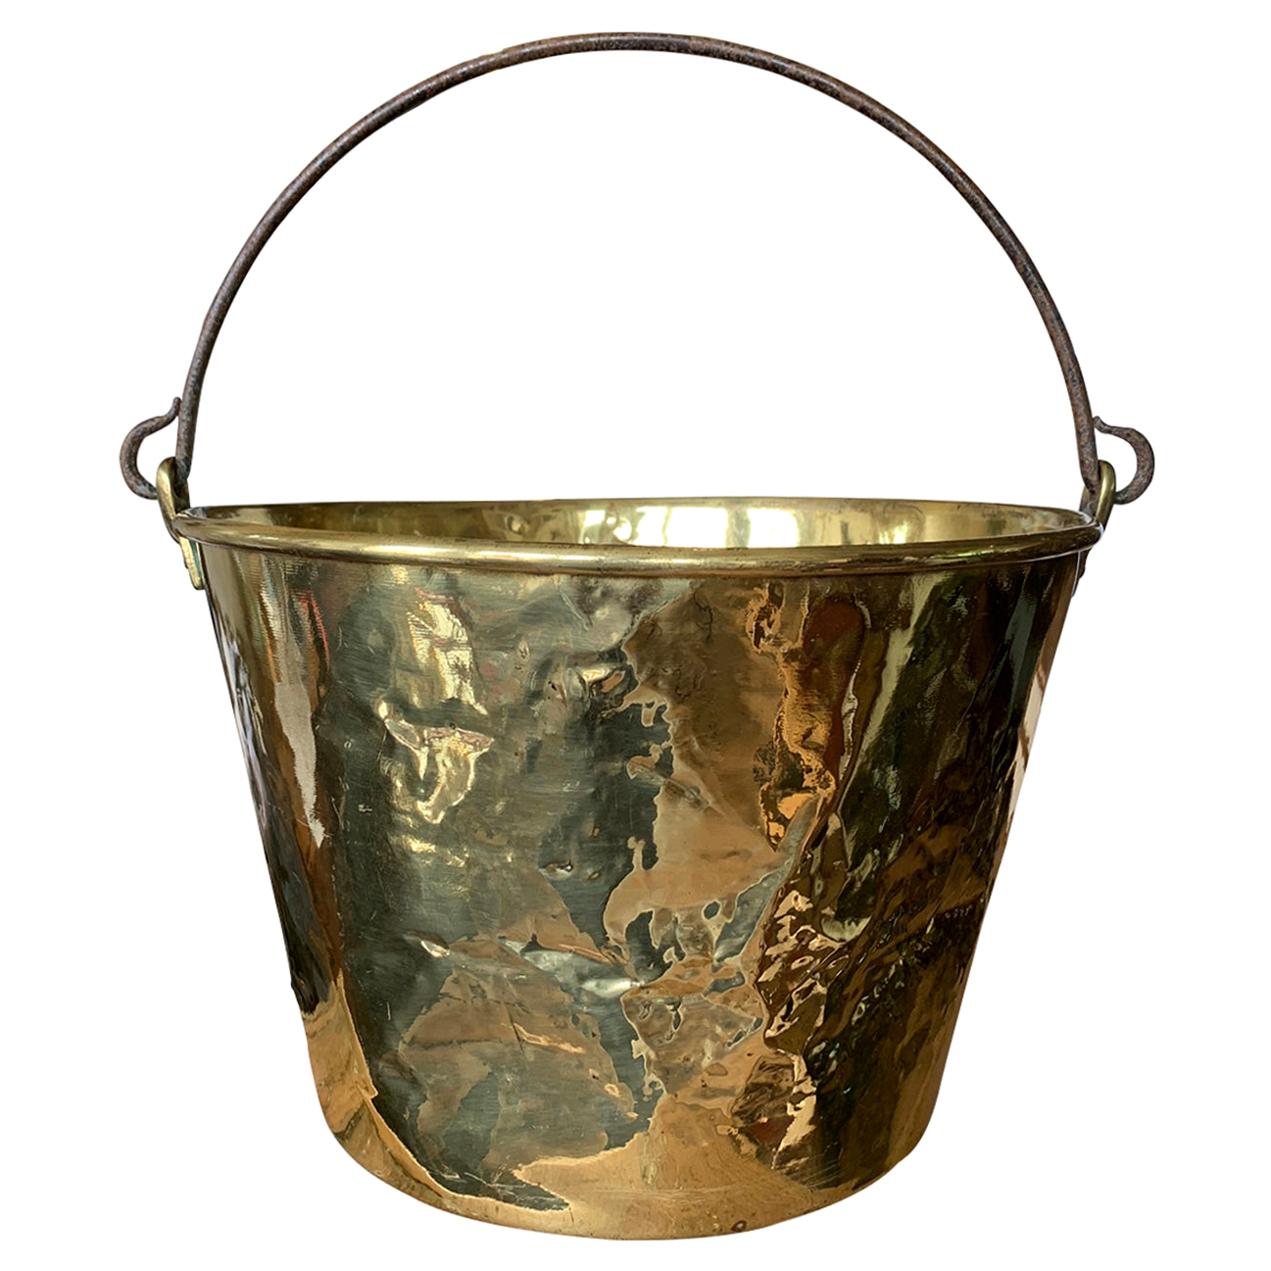 19th-20th Century English Brass Bucket with Iron Handle